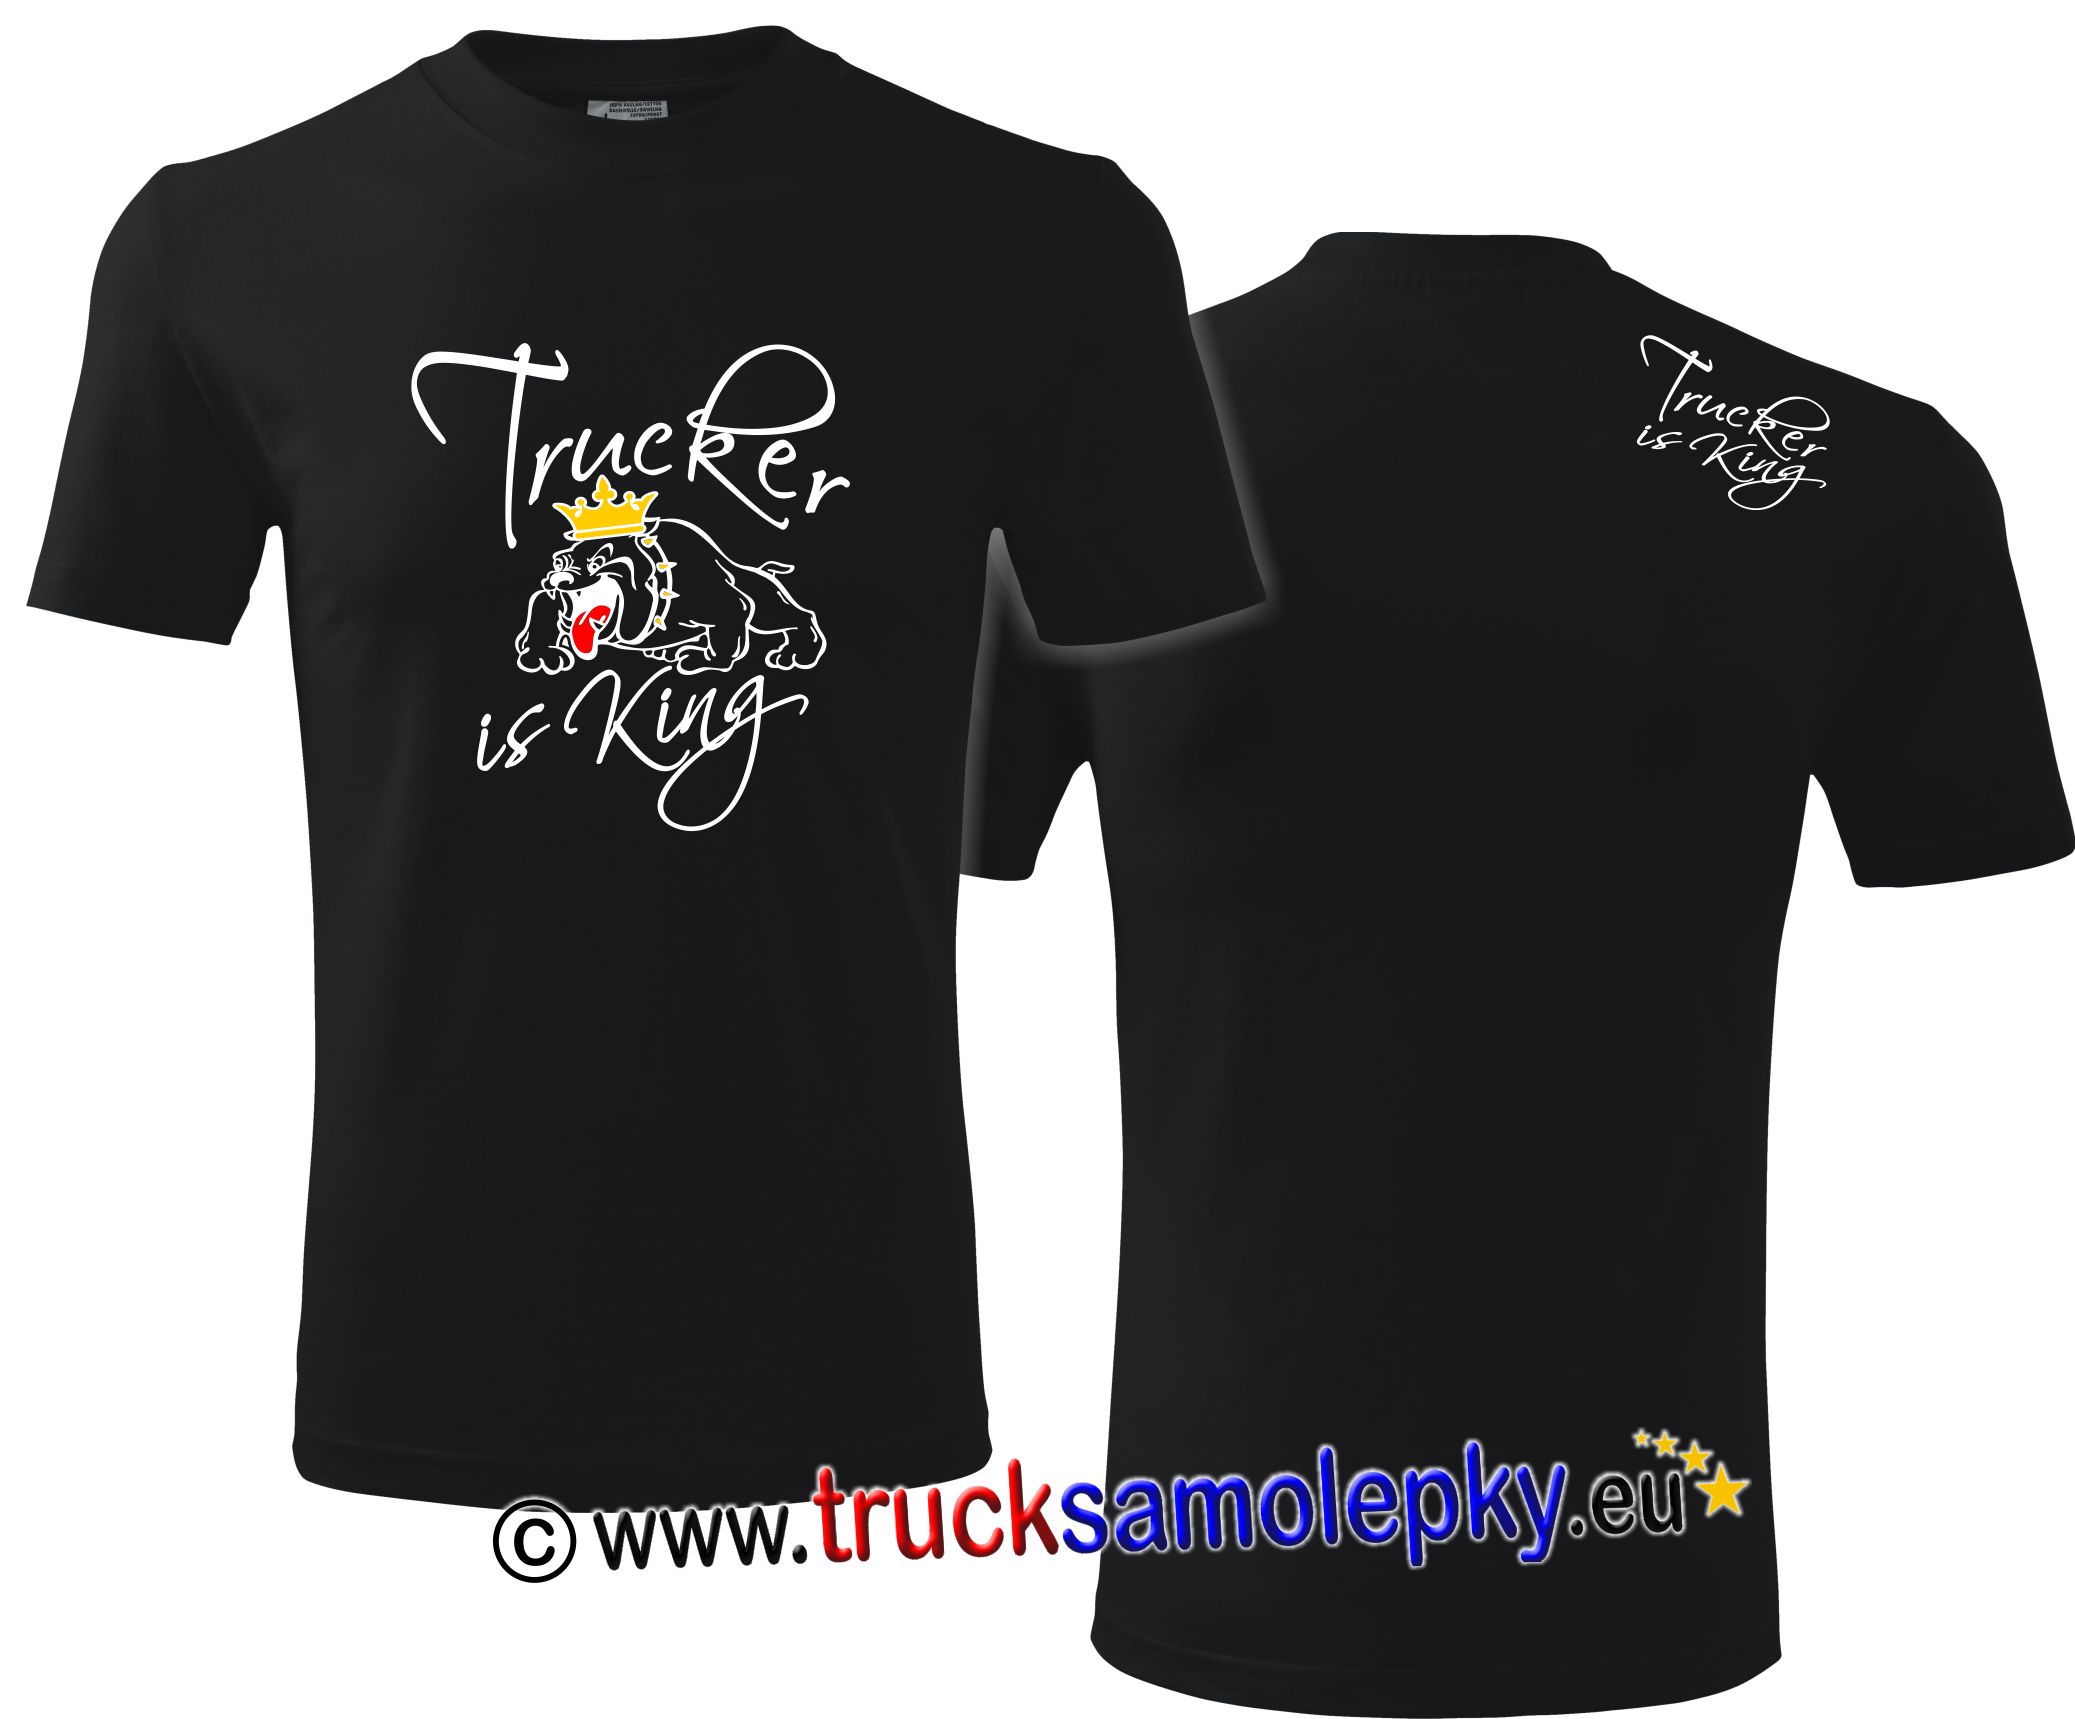 Truck tričko TRUCKER IS KING II. v barvě černé